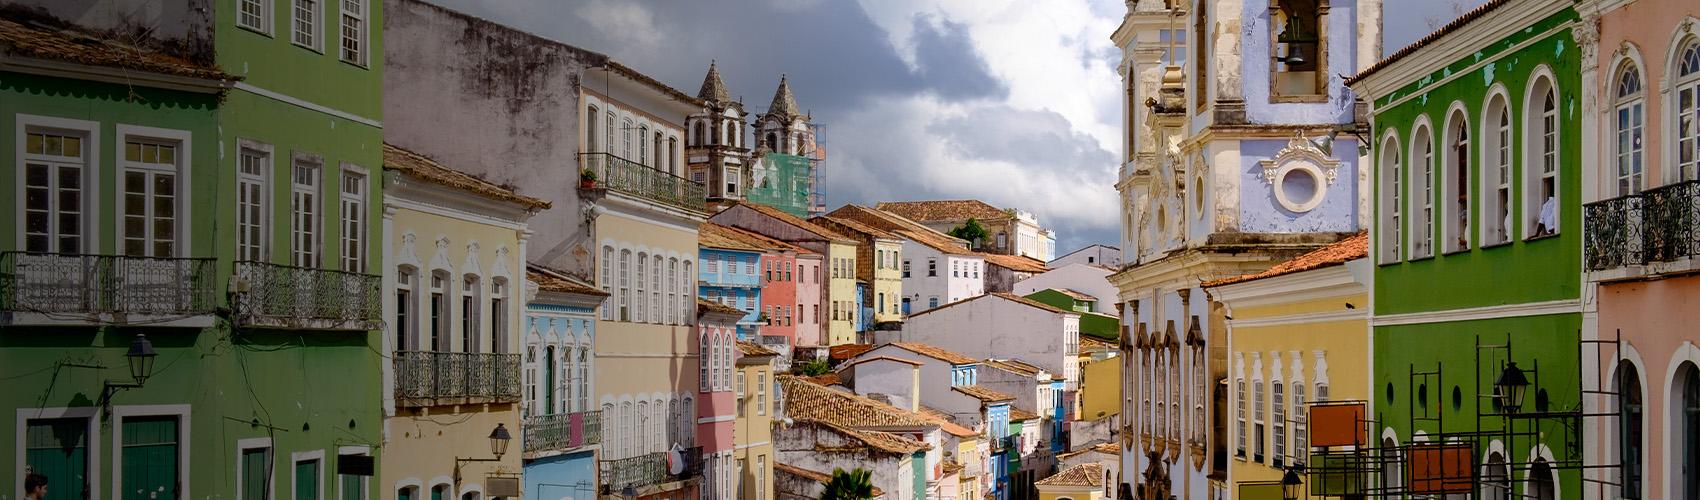 Colorful buildings in Salvador de Bahia, Brazil